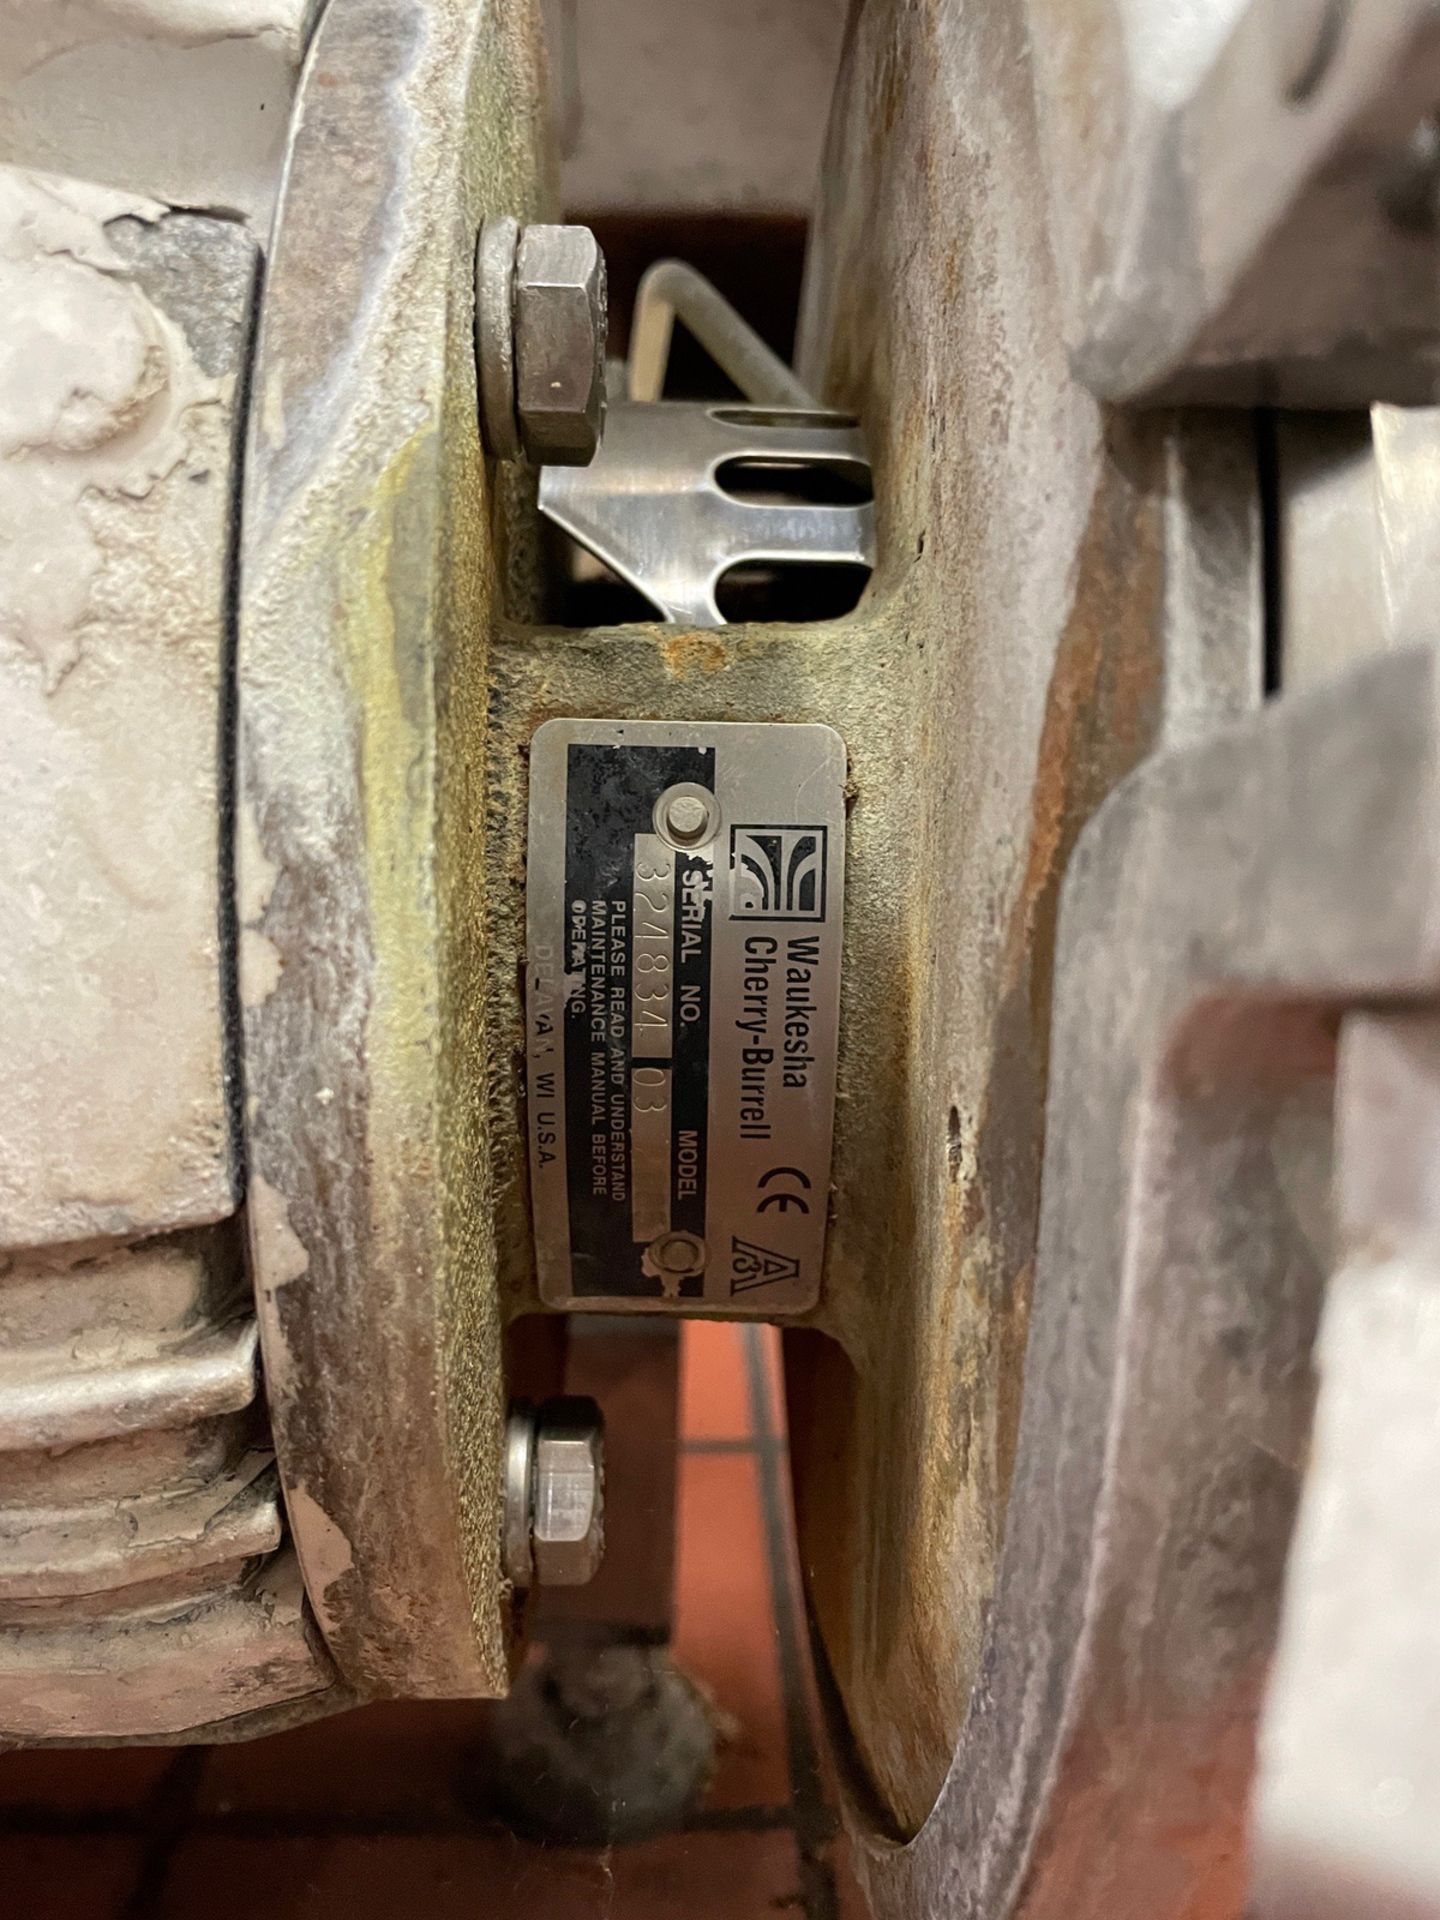 Waukesha Cherry Burrell Centrifugal Pump, 7.5 HP, Model 2085, S/N: 324834-03 | Rig Fee: $150 - Image 2 of 4